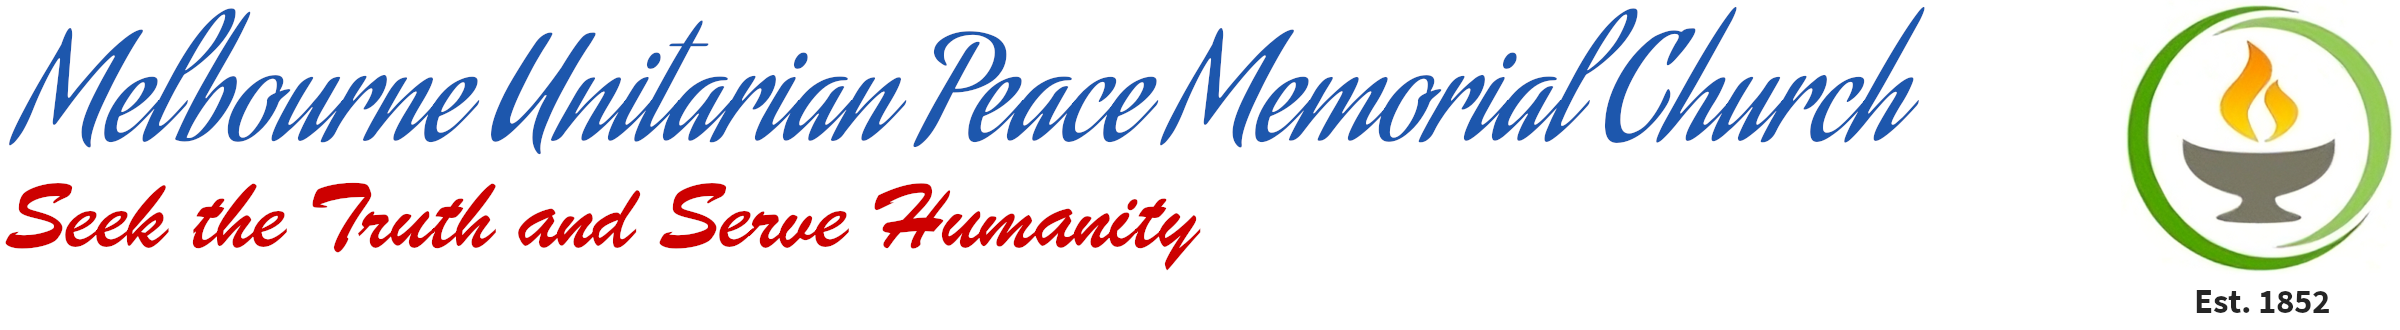 Melbourne Unitarian Peace Memorial Church Banner